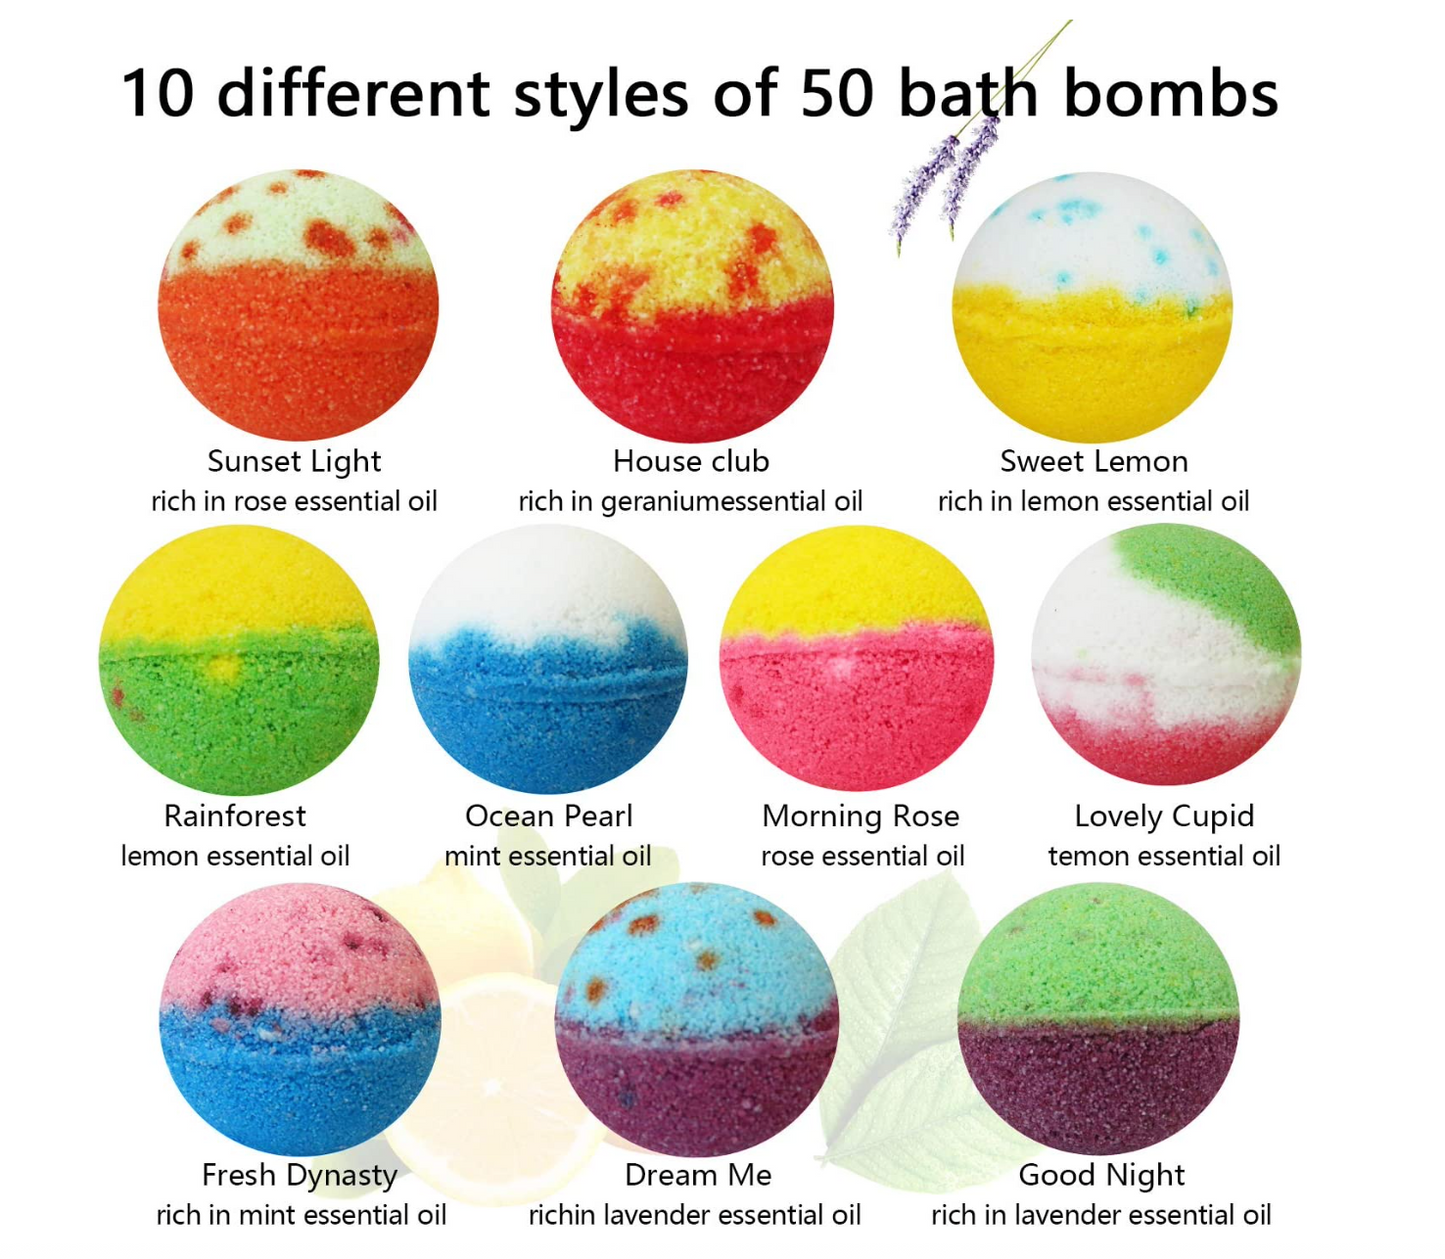 Nagaliving Bath Bombs Gift Set, 50 Handmade Bulk Bath Bombs for Kids, Women, Men, Wonderful Fizz Effect Bath Gift for Valentine's Day, Christmas & Any Anniversaries